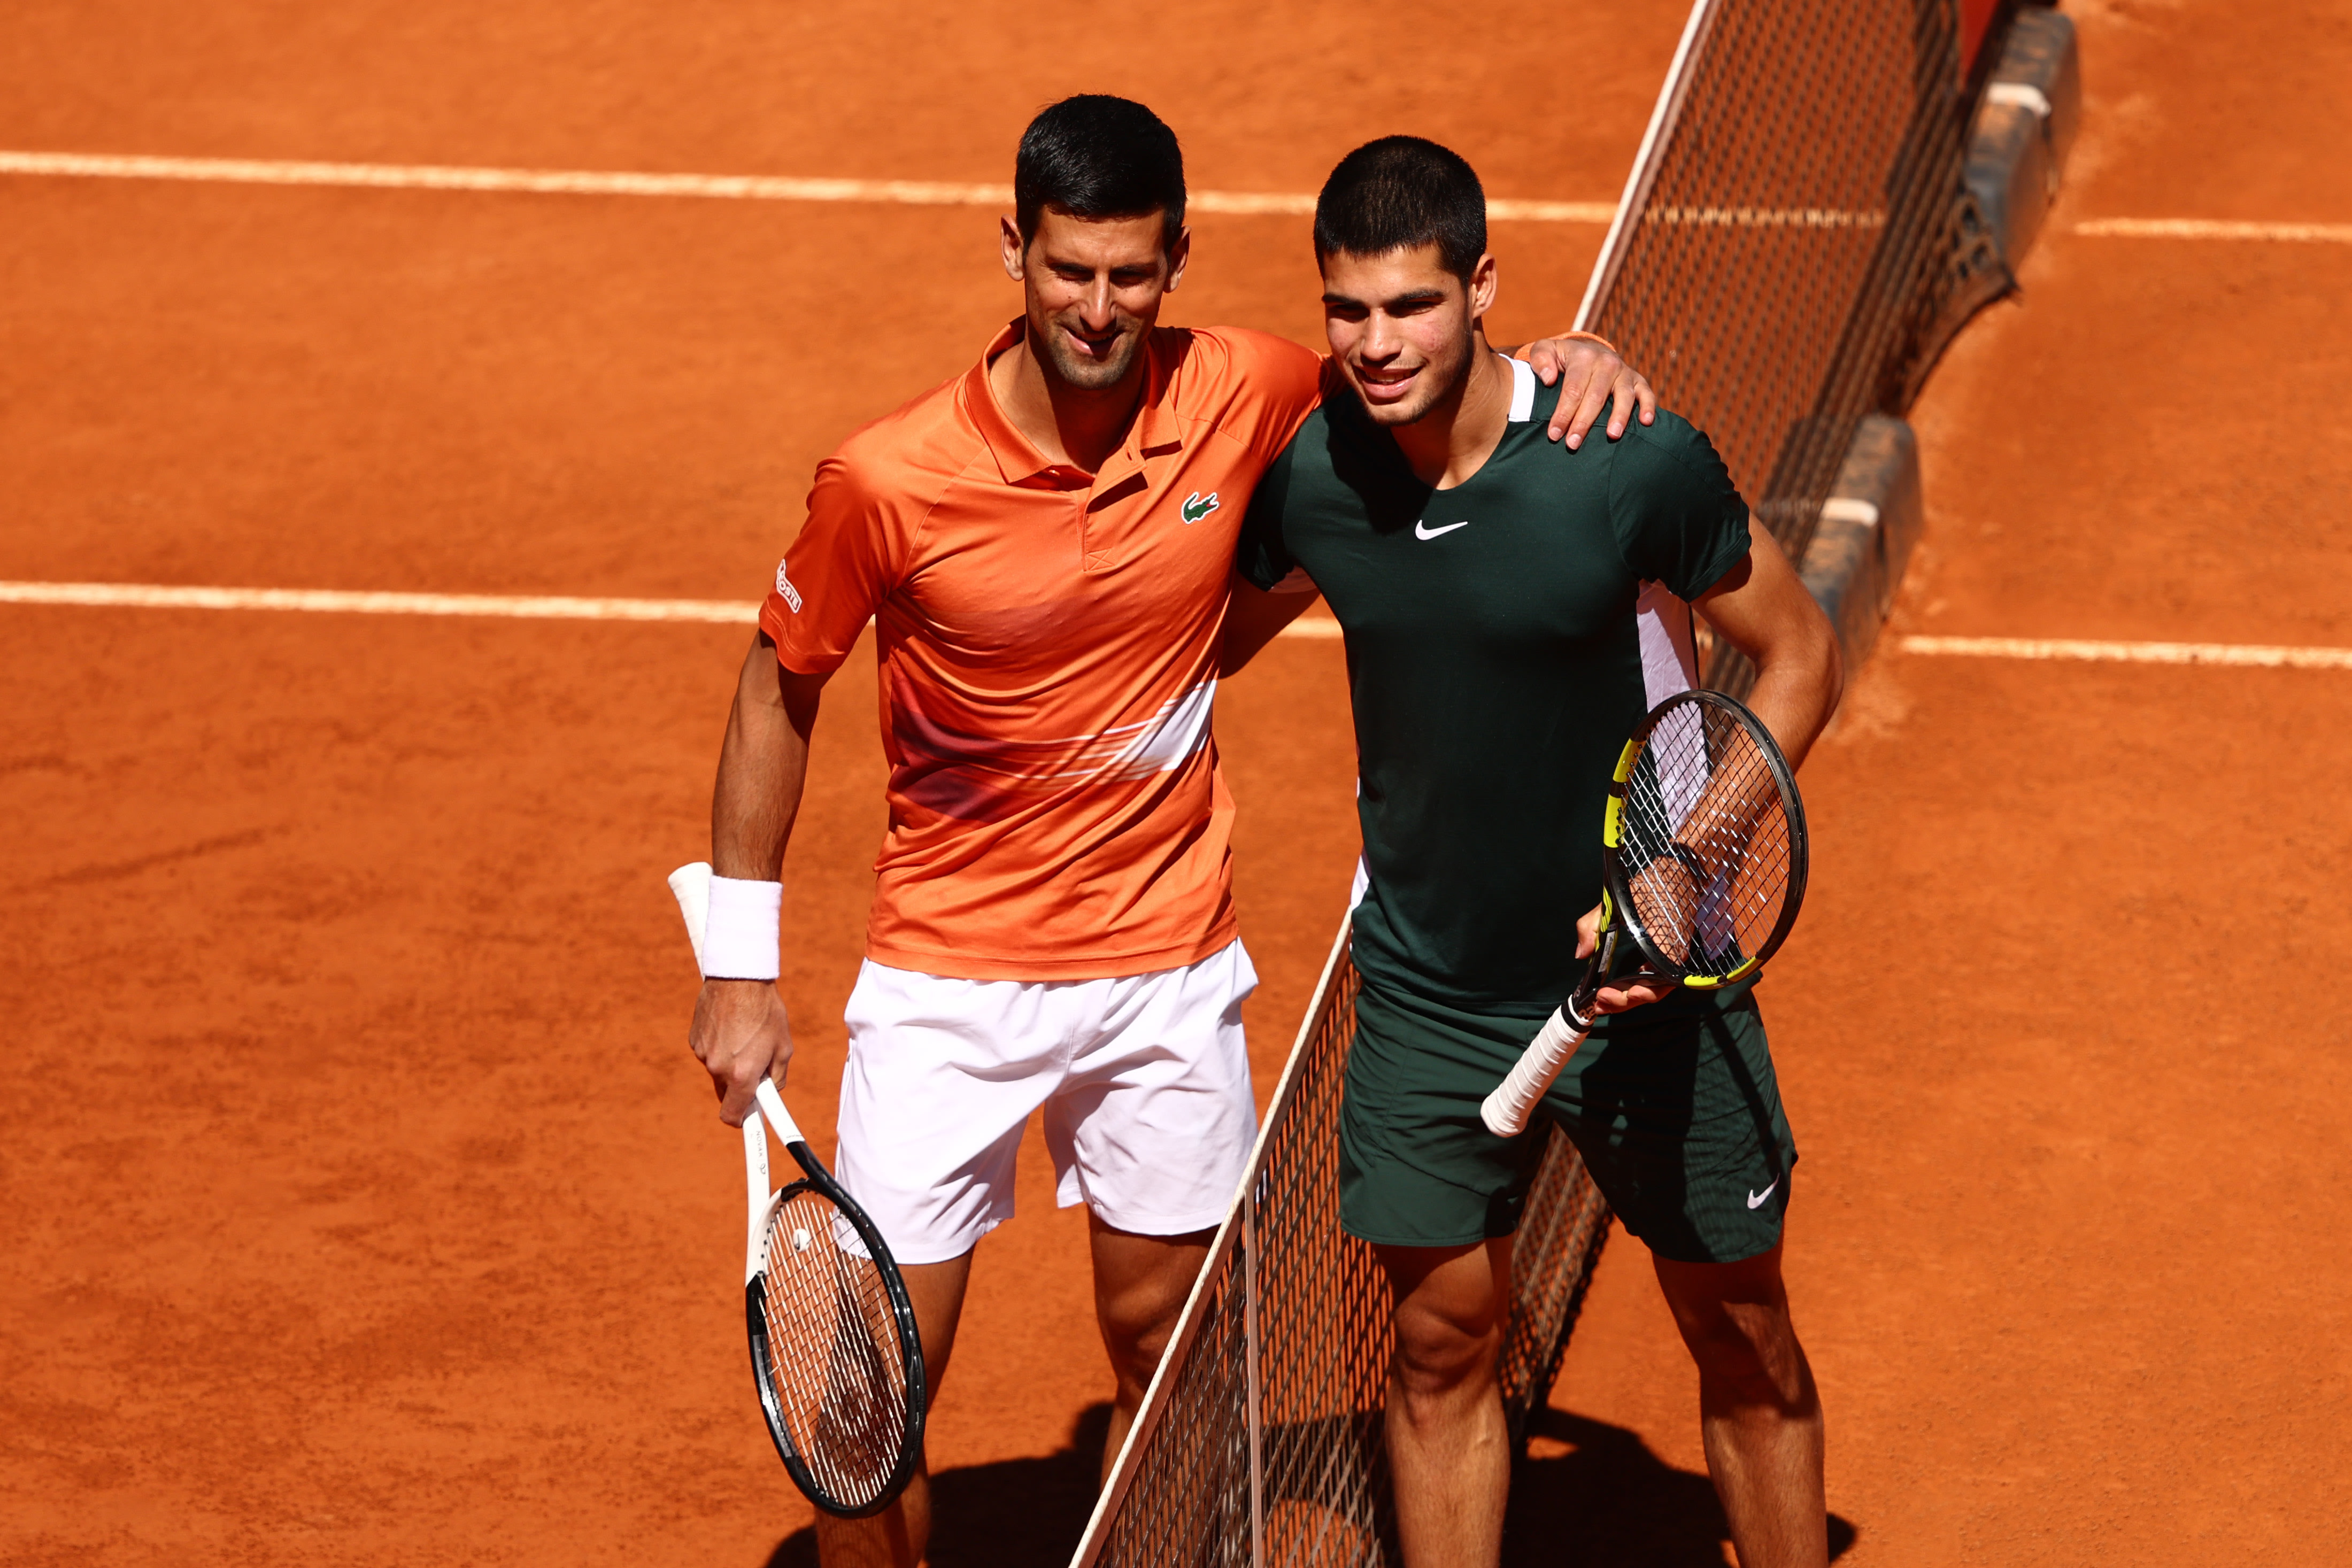 2023 Italian Open Rome Masters Atp Draw with Djokovic, Alcaraz & more - IMDb